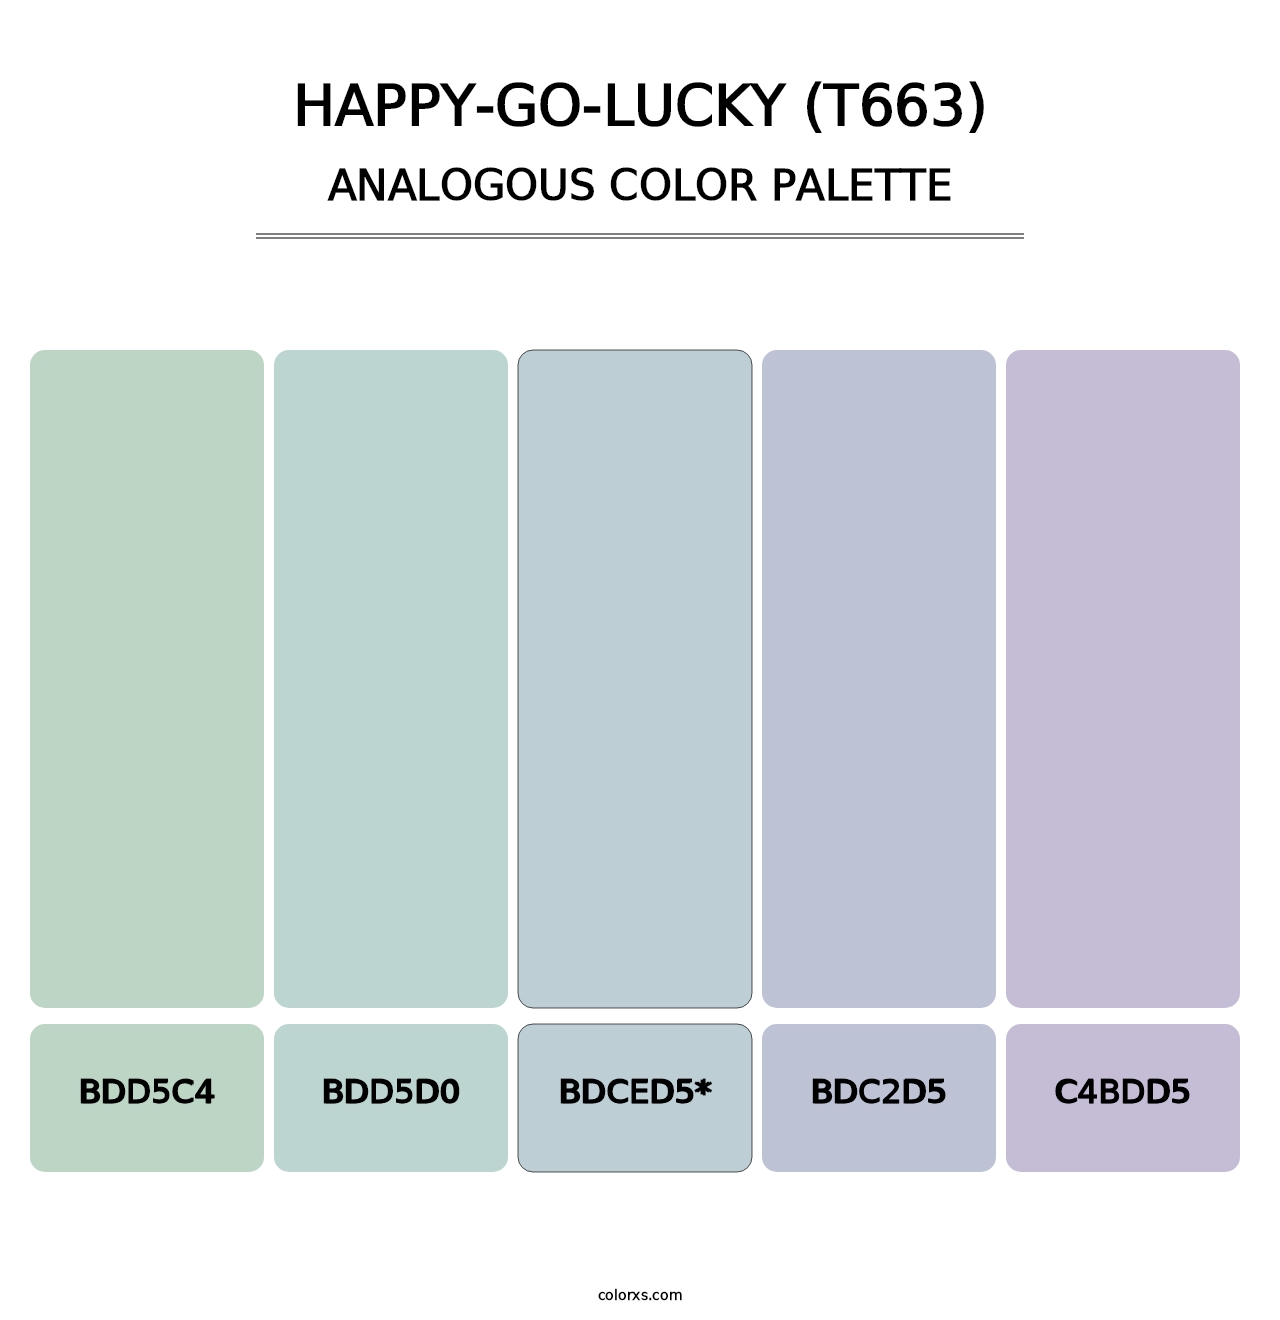 Happy-Go-Lucky (T663) - Analogous Color Palette